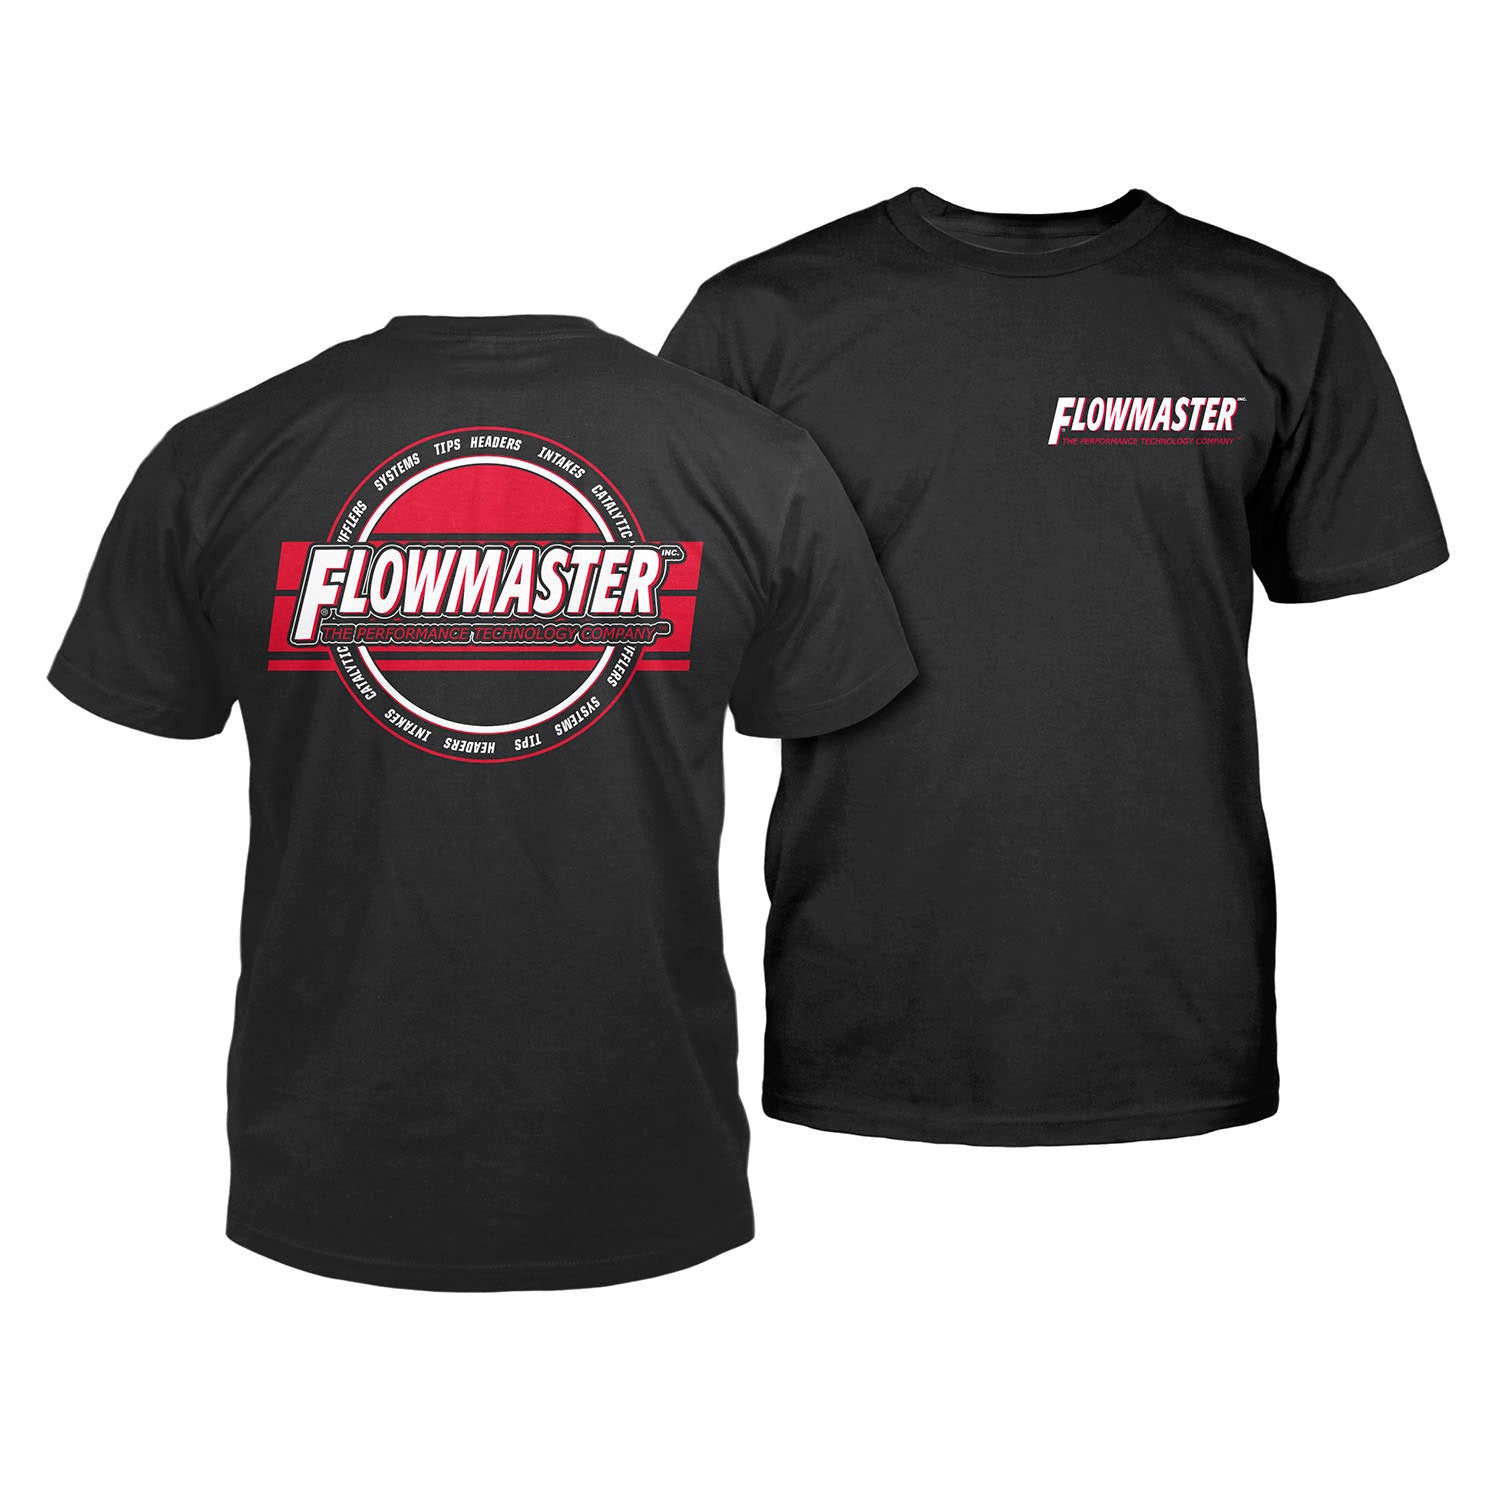 Flowmaster T-Shirt 610355